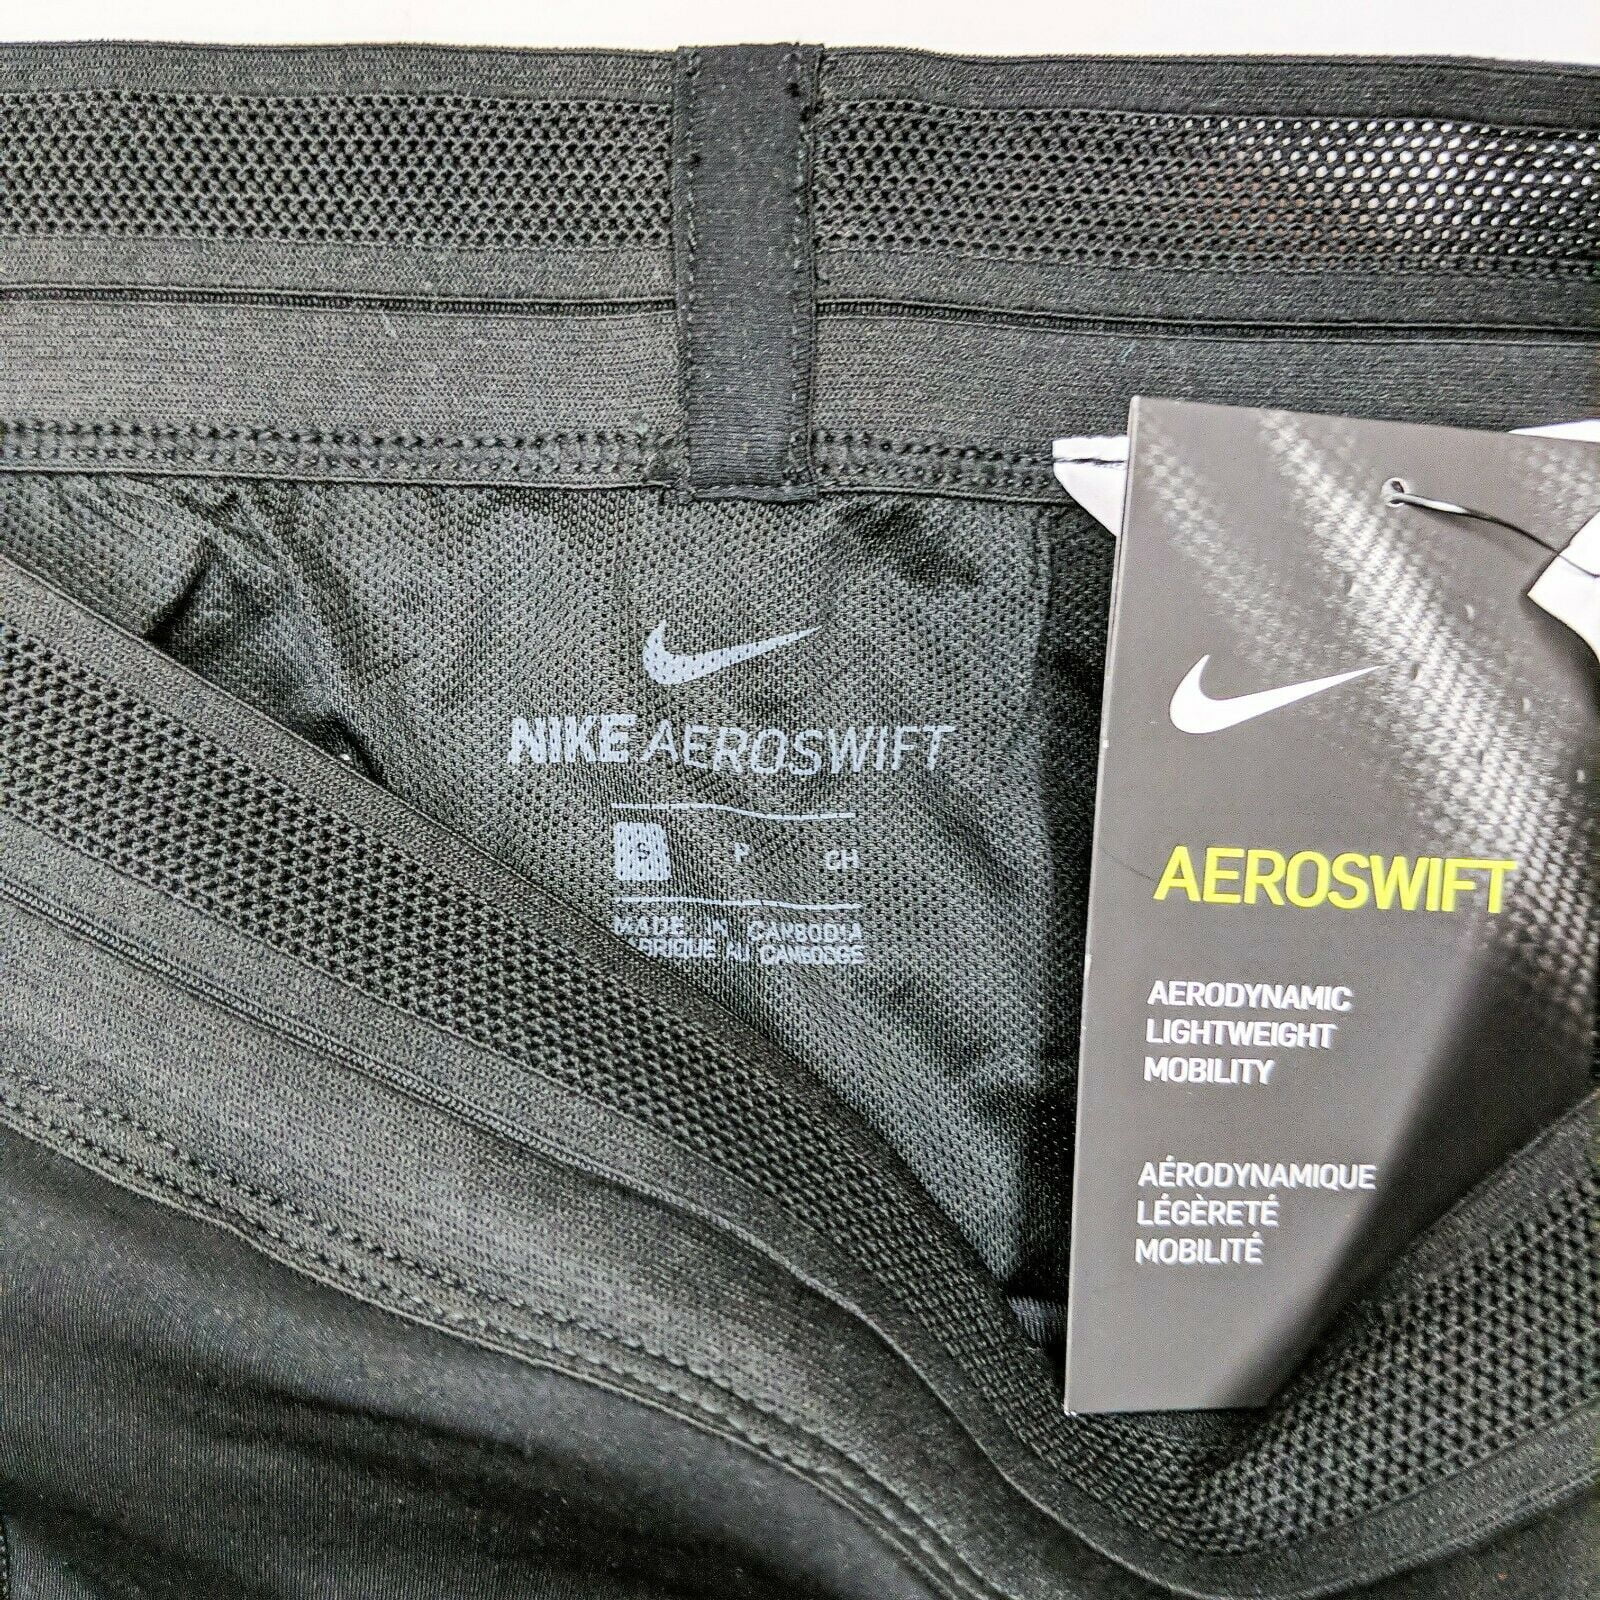 NEW Nike Mens Aeroswift Running 1/2 Half Tights Black AR3246-010